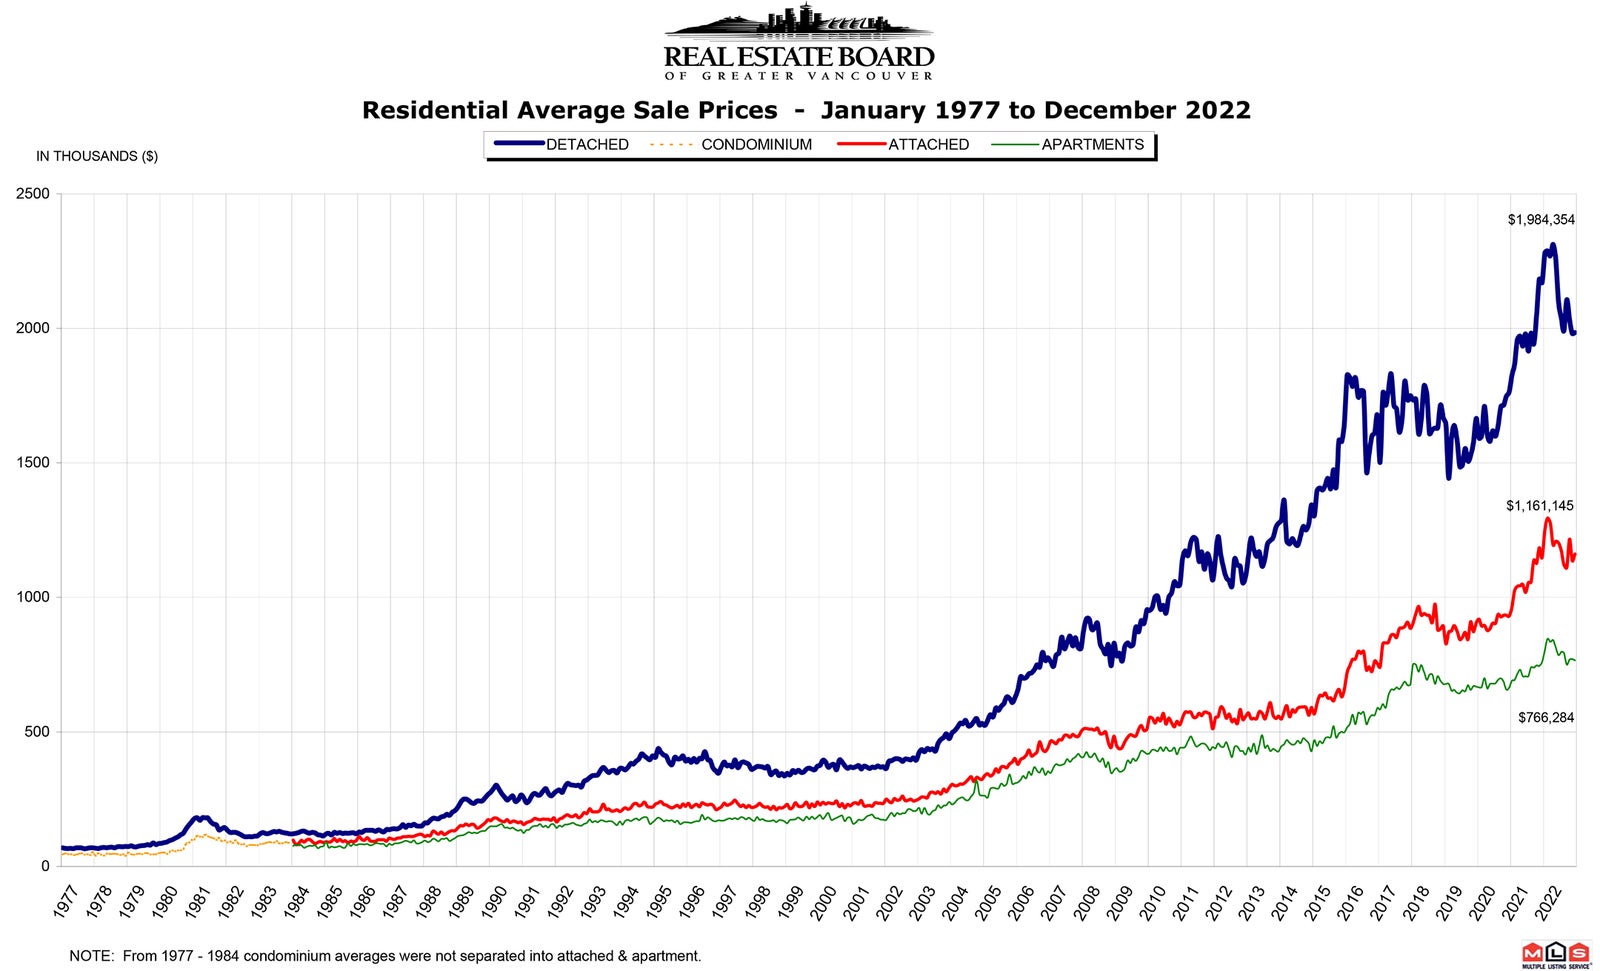 Residential Average Sale Price RASP December 2022 Chris Frederickson Real Estate Vancouver